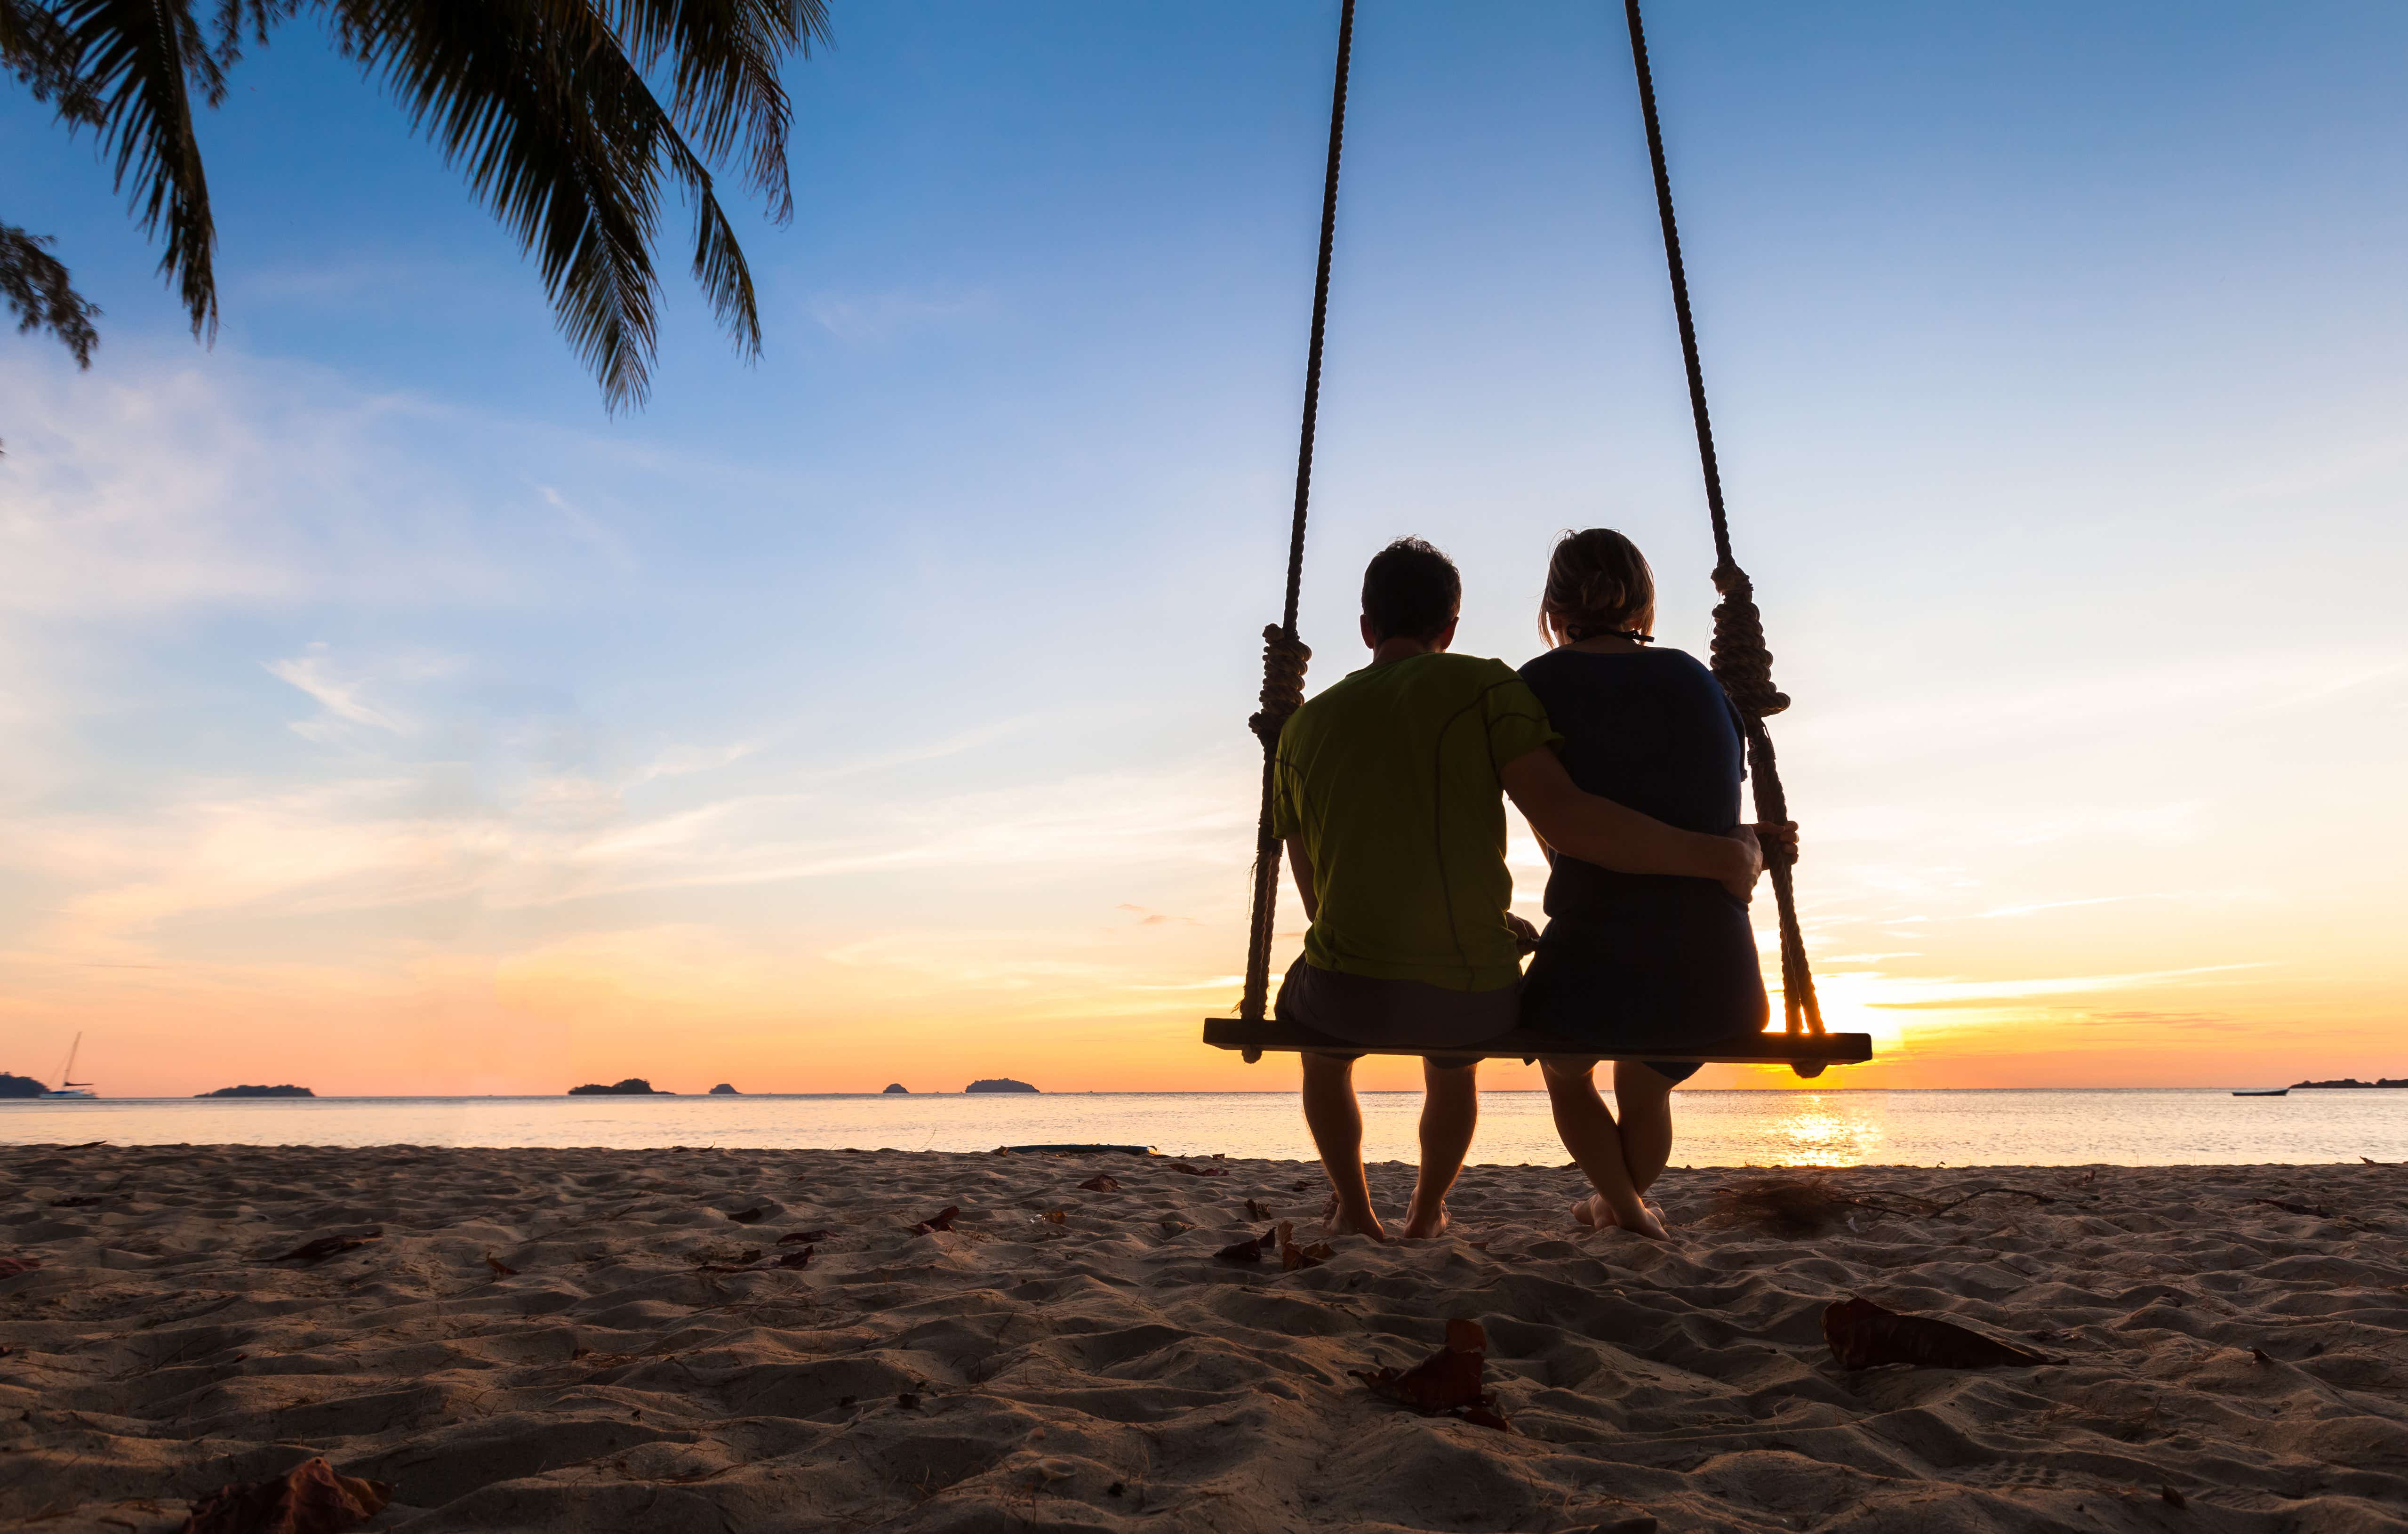 Couple on paradise beach resort sharing honeymoon